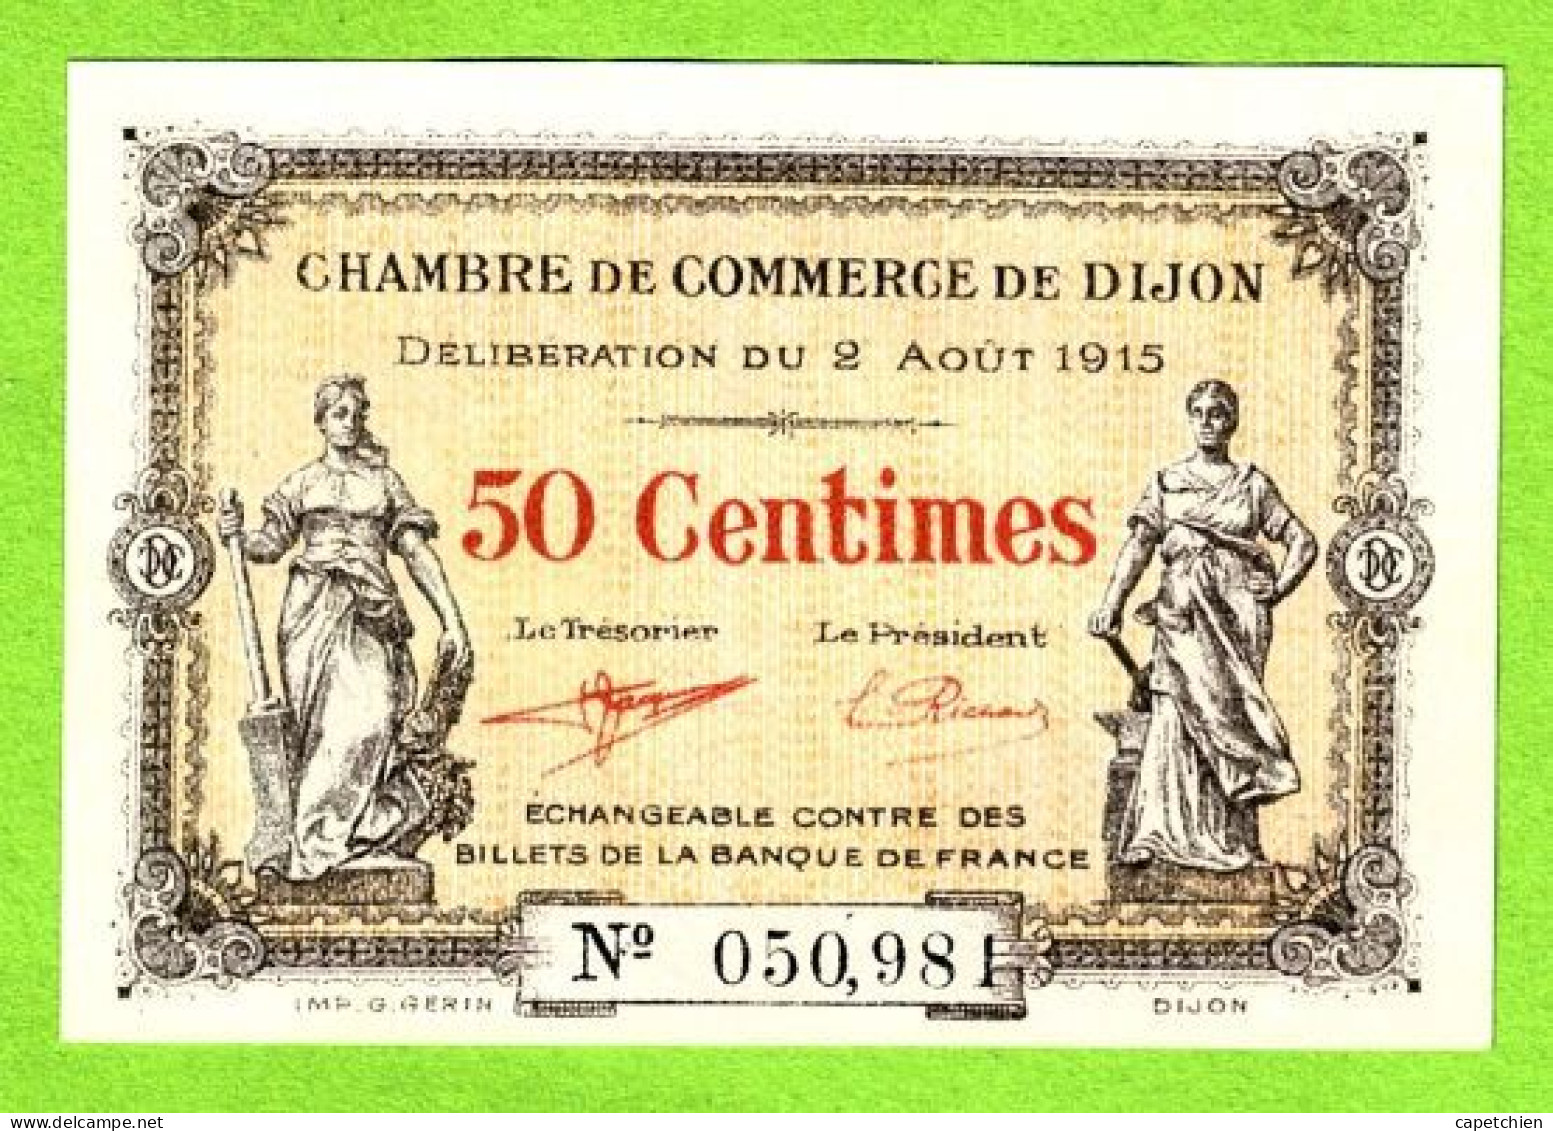 FRANCE / CHAMBRE De COMMERCE De DIJON/ 50 CENT. / 2 AOUT 1915 / N° 050,98 / SERIE - Cámara De Comercio